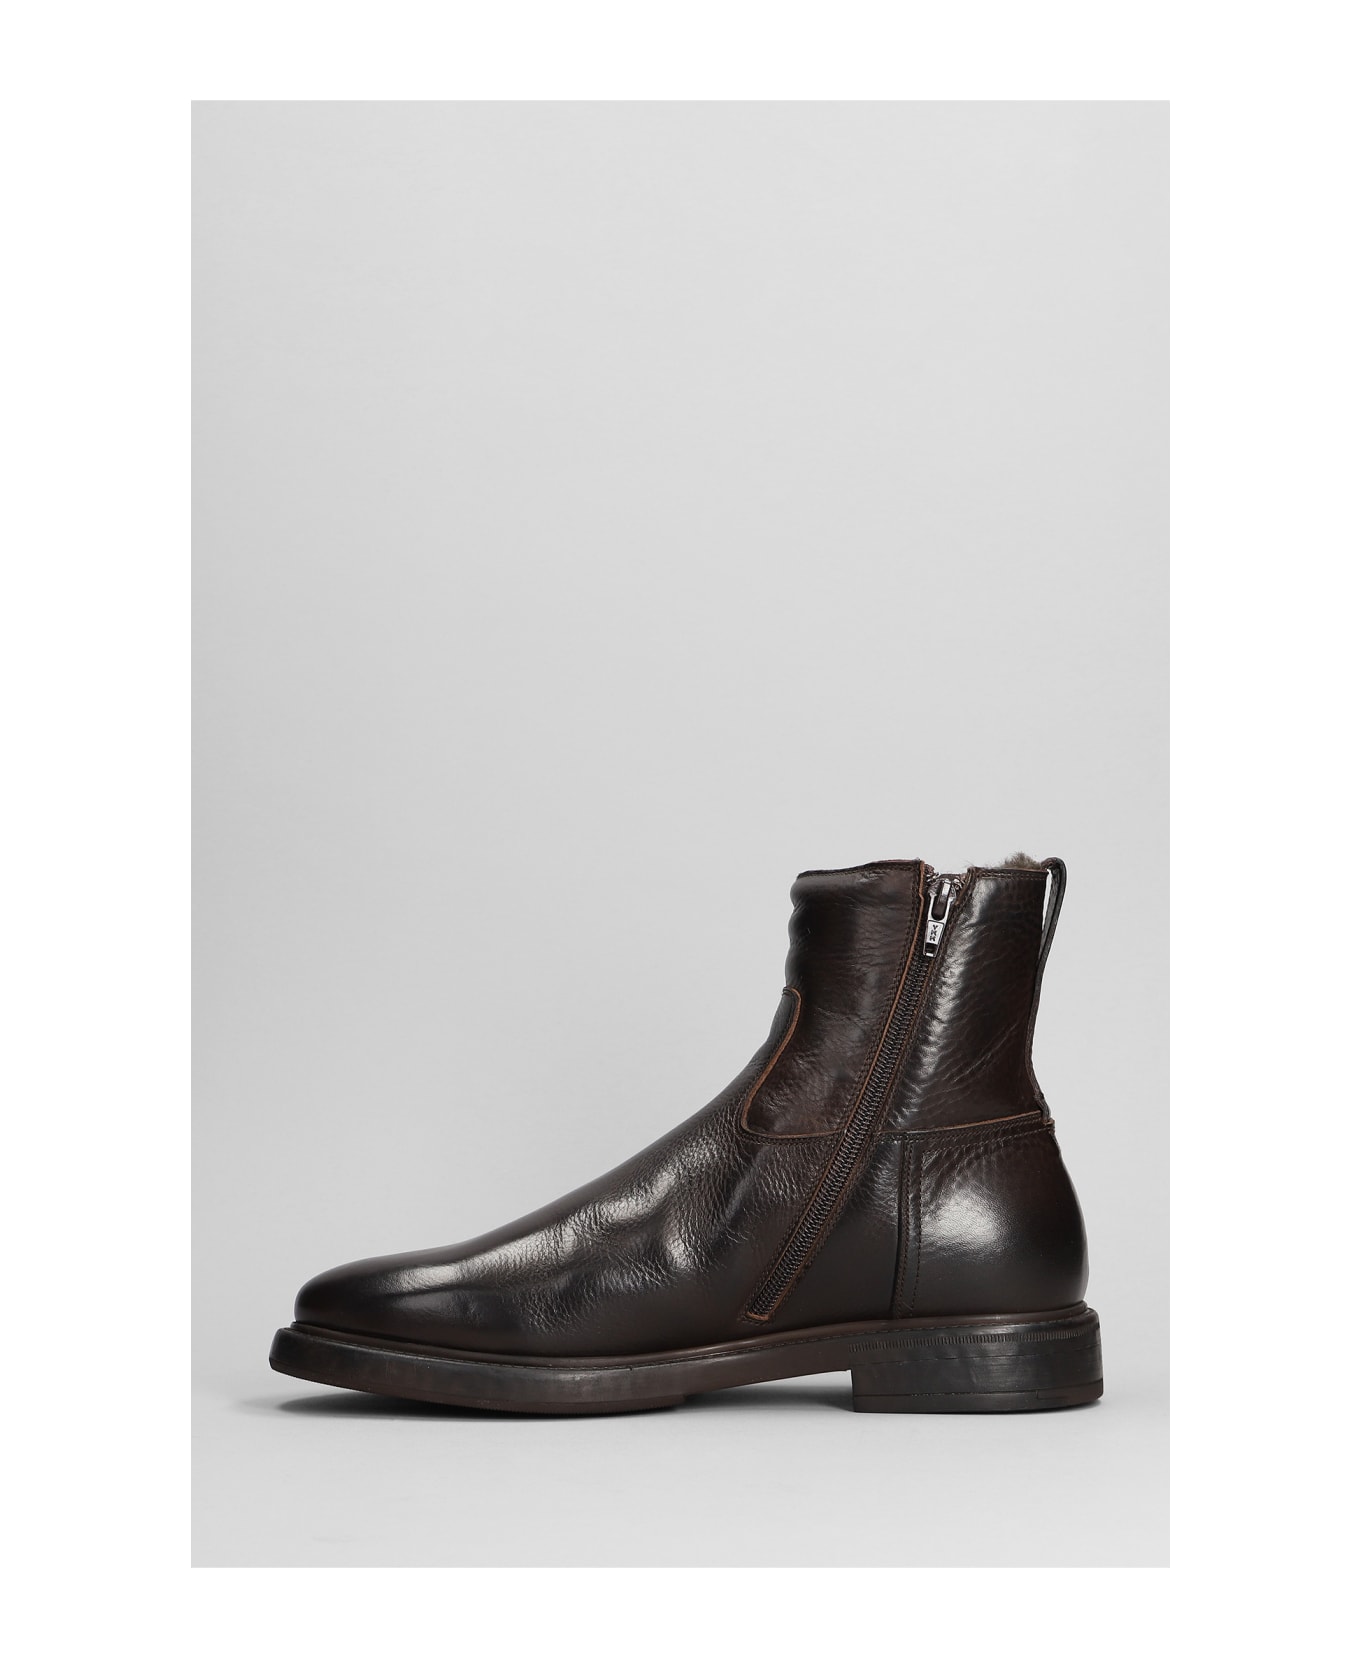 Silvano Sassetti Low Heels Ankle Boots In Dark Brown Leather - dark brown